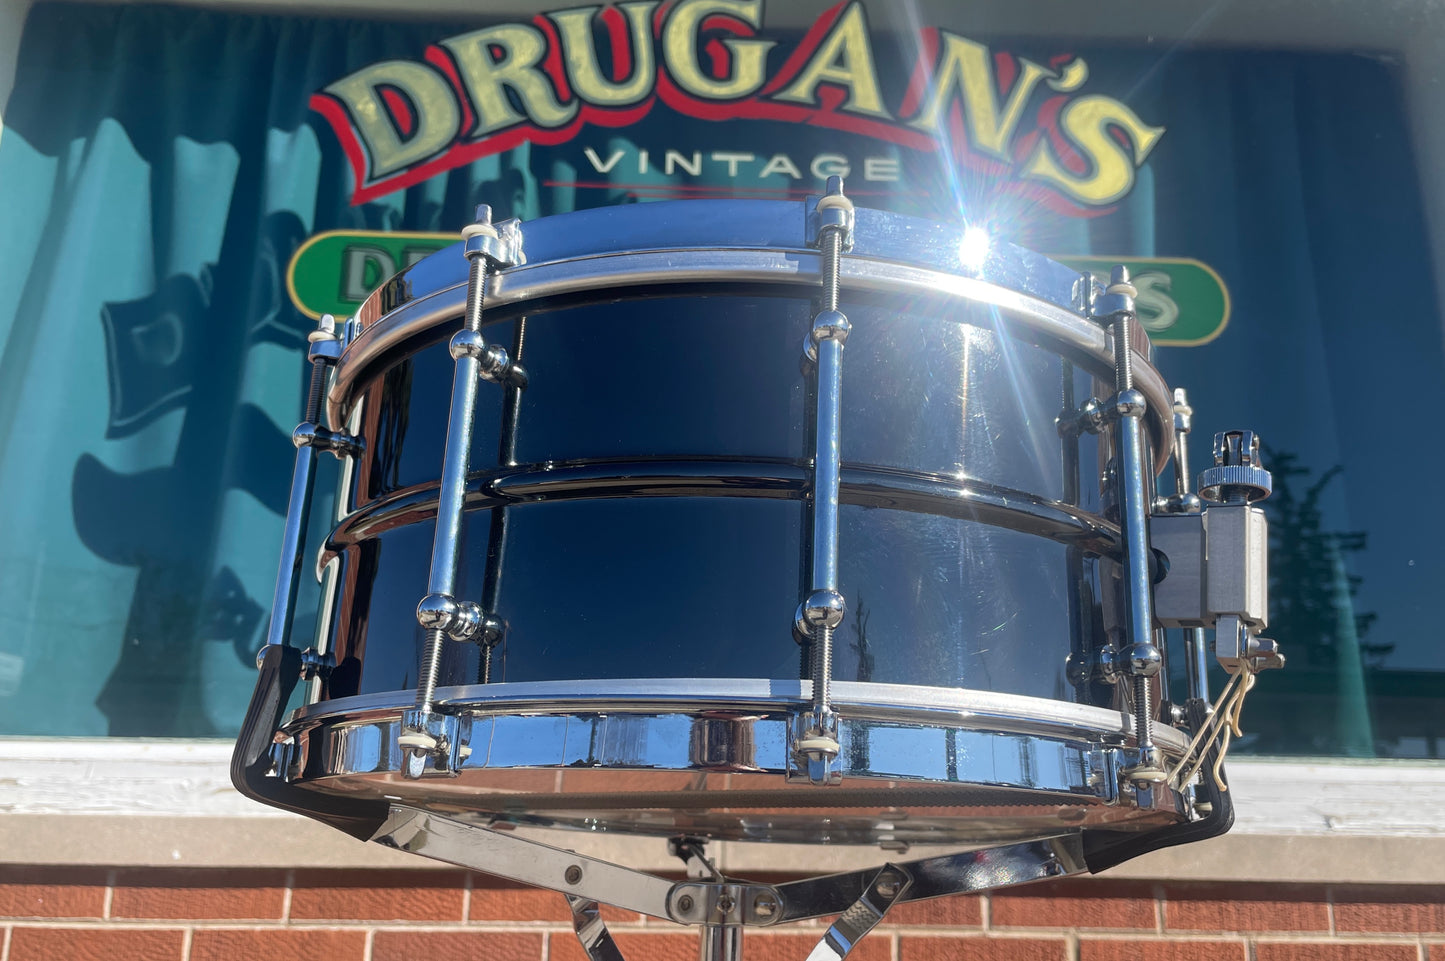 WorldMax 6.5x14 Black Nickel Brass Snare Drum *A Beauty!*